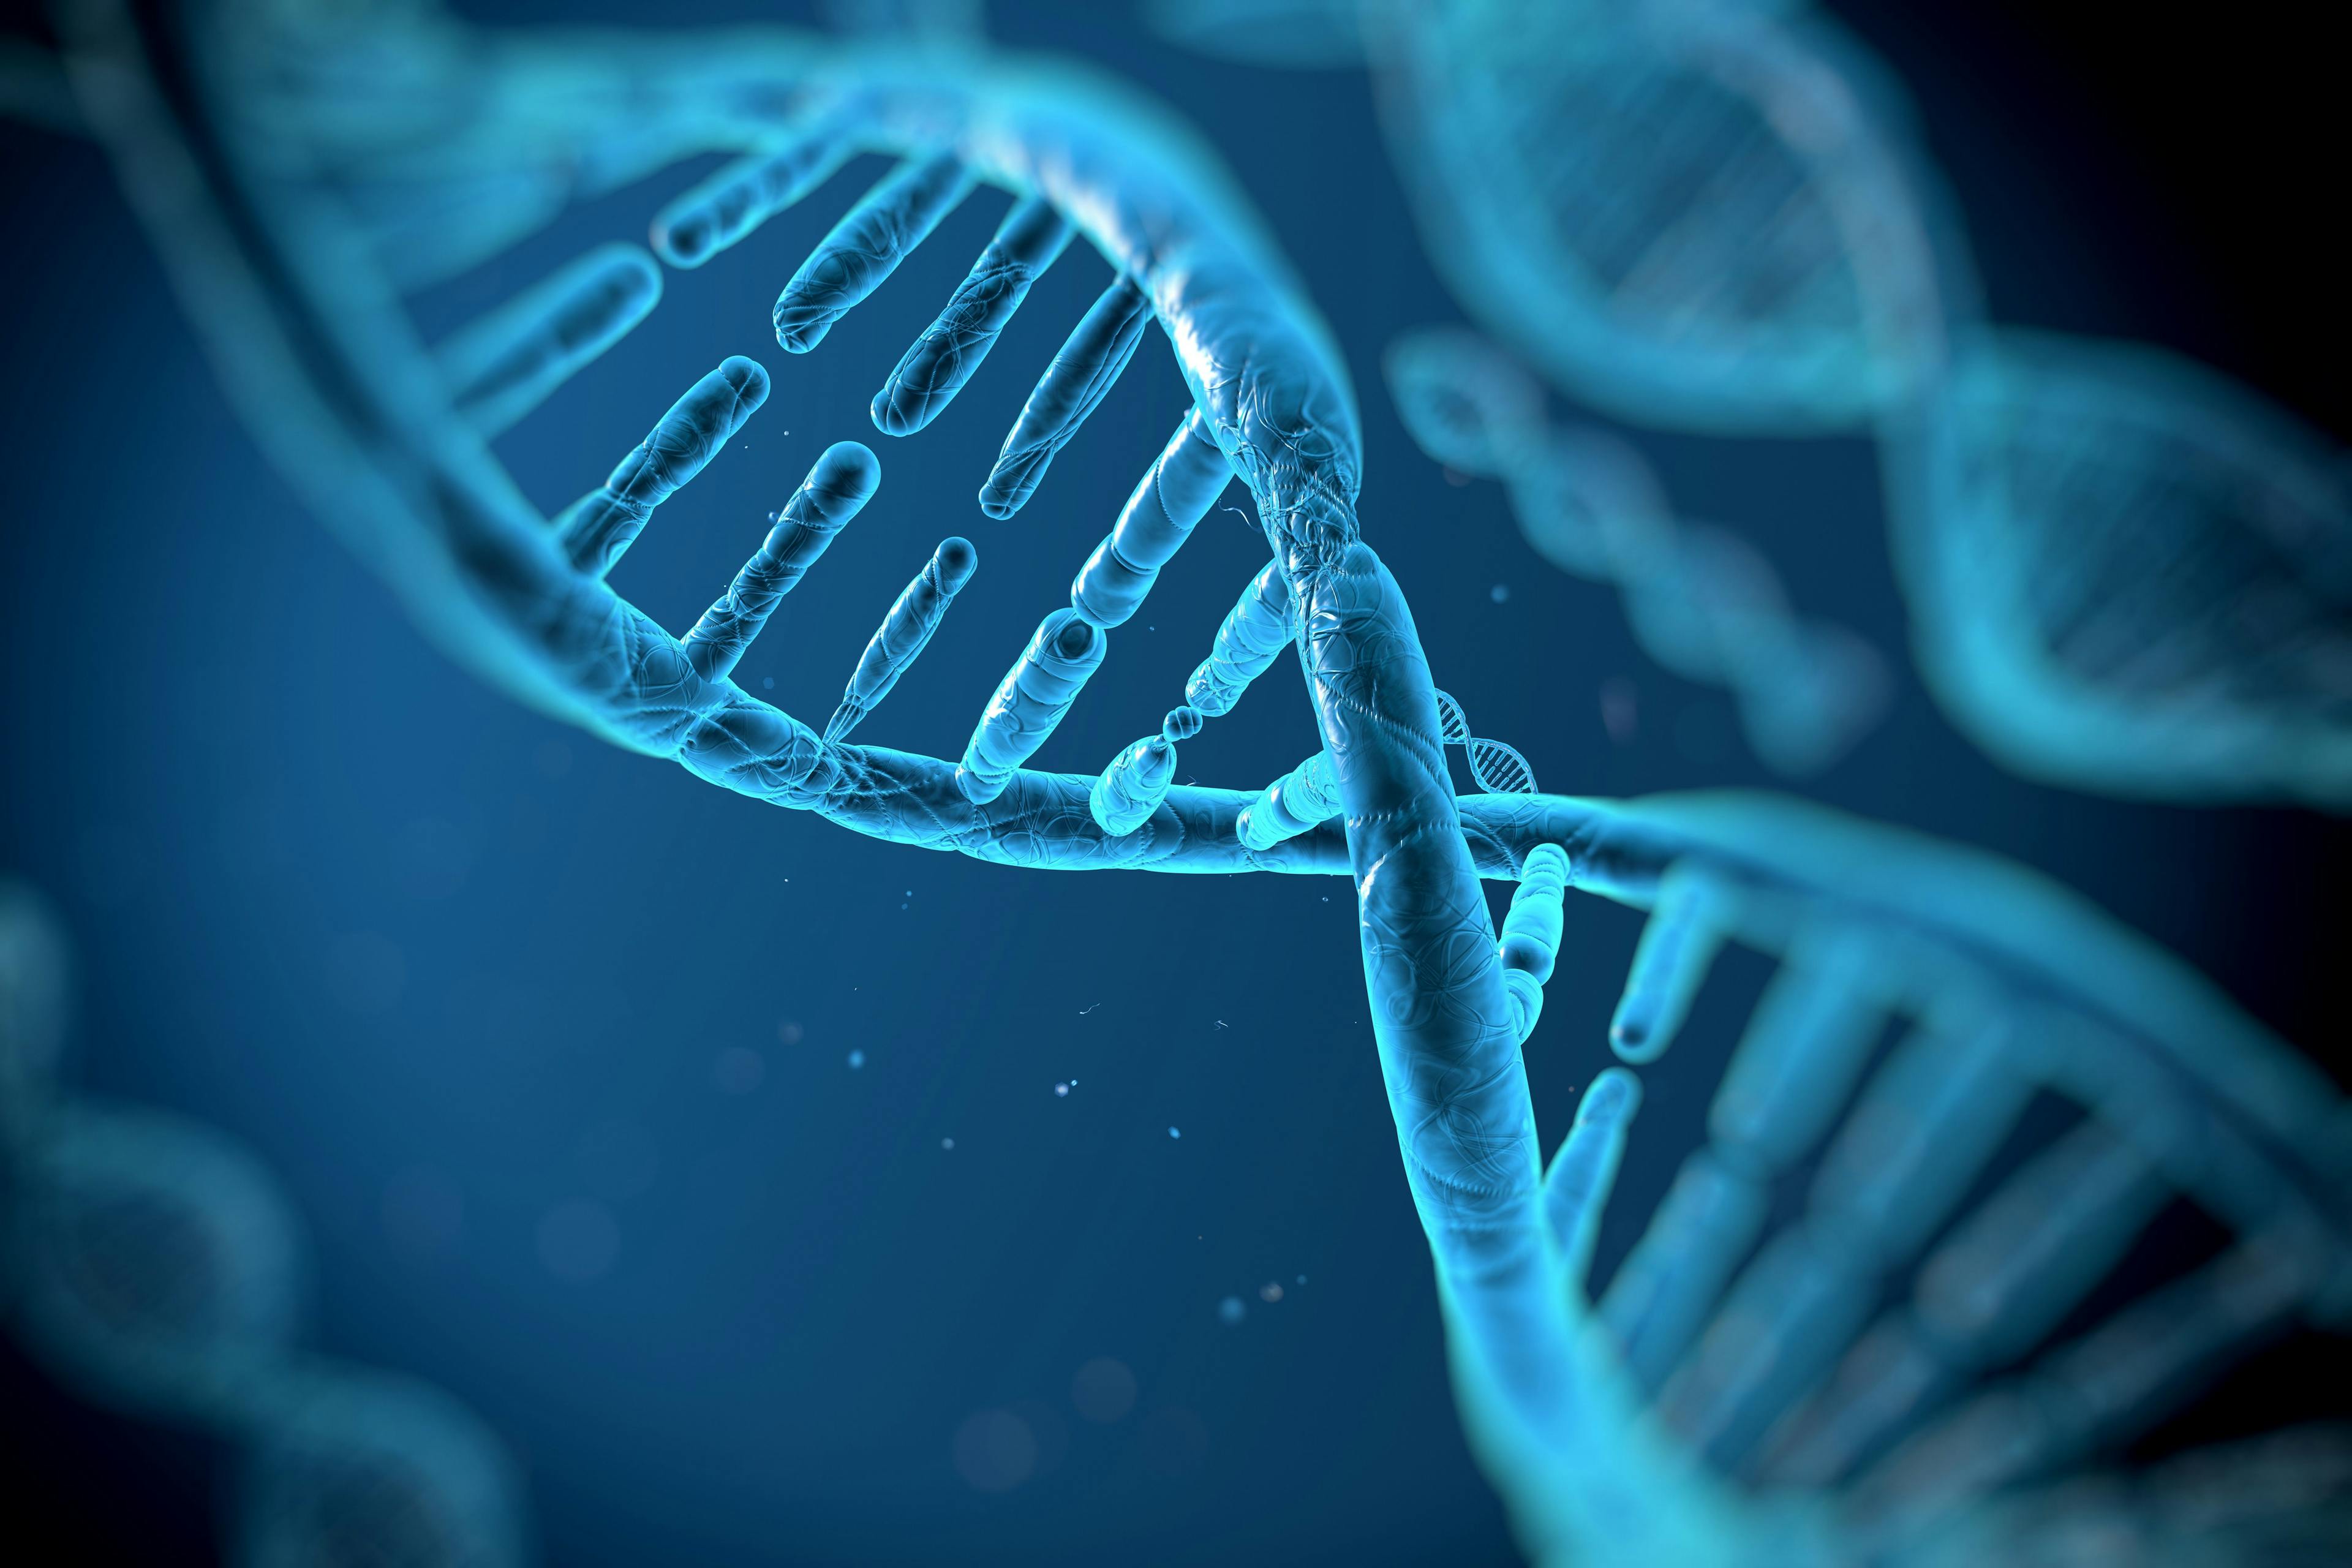 DNA molecules | Image Credit: © vitstudio - stock.adobe.com